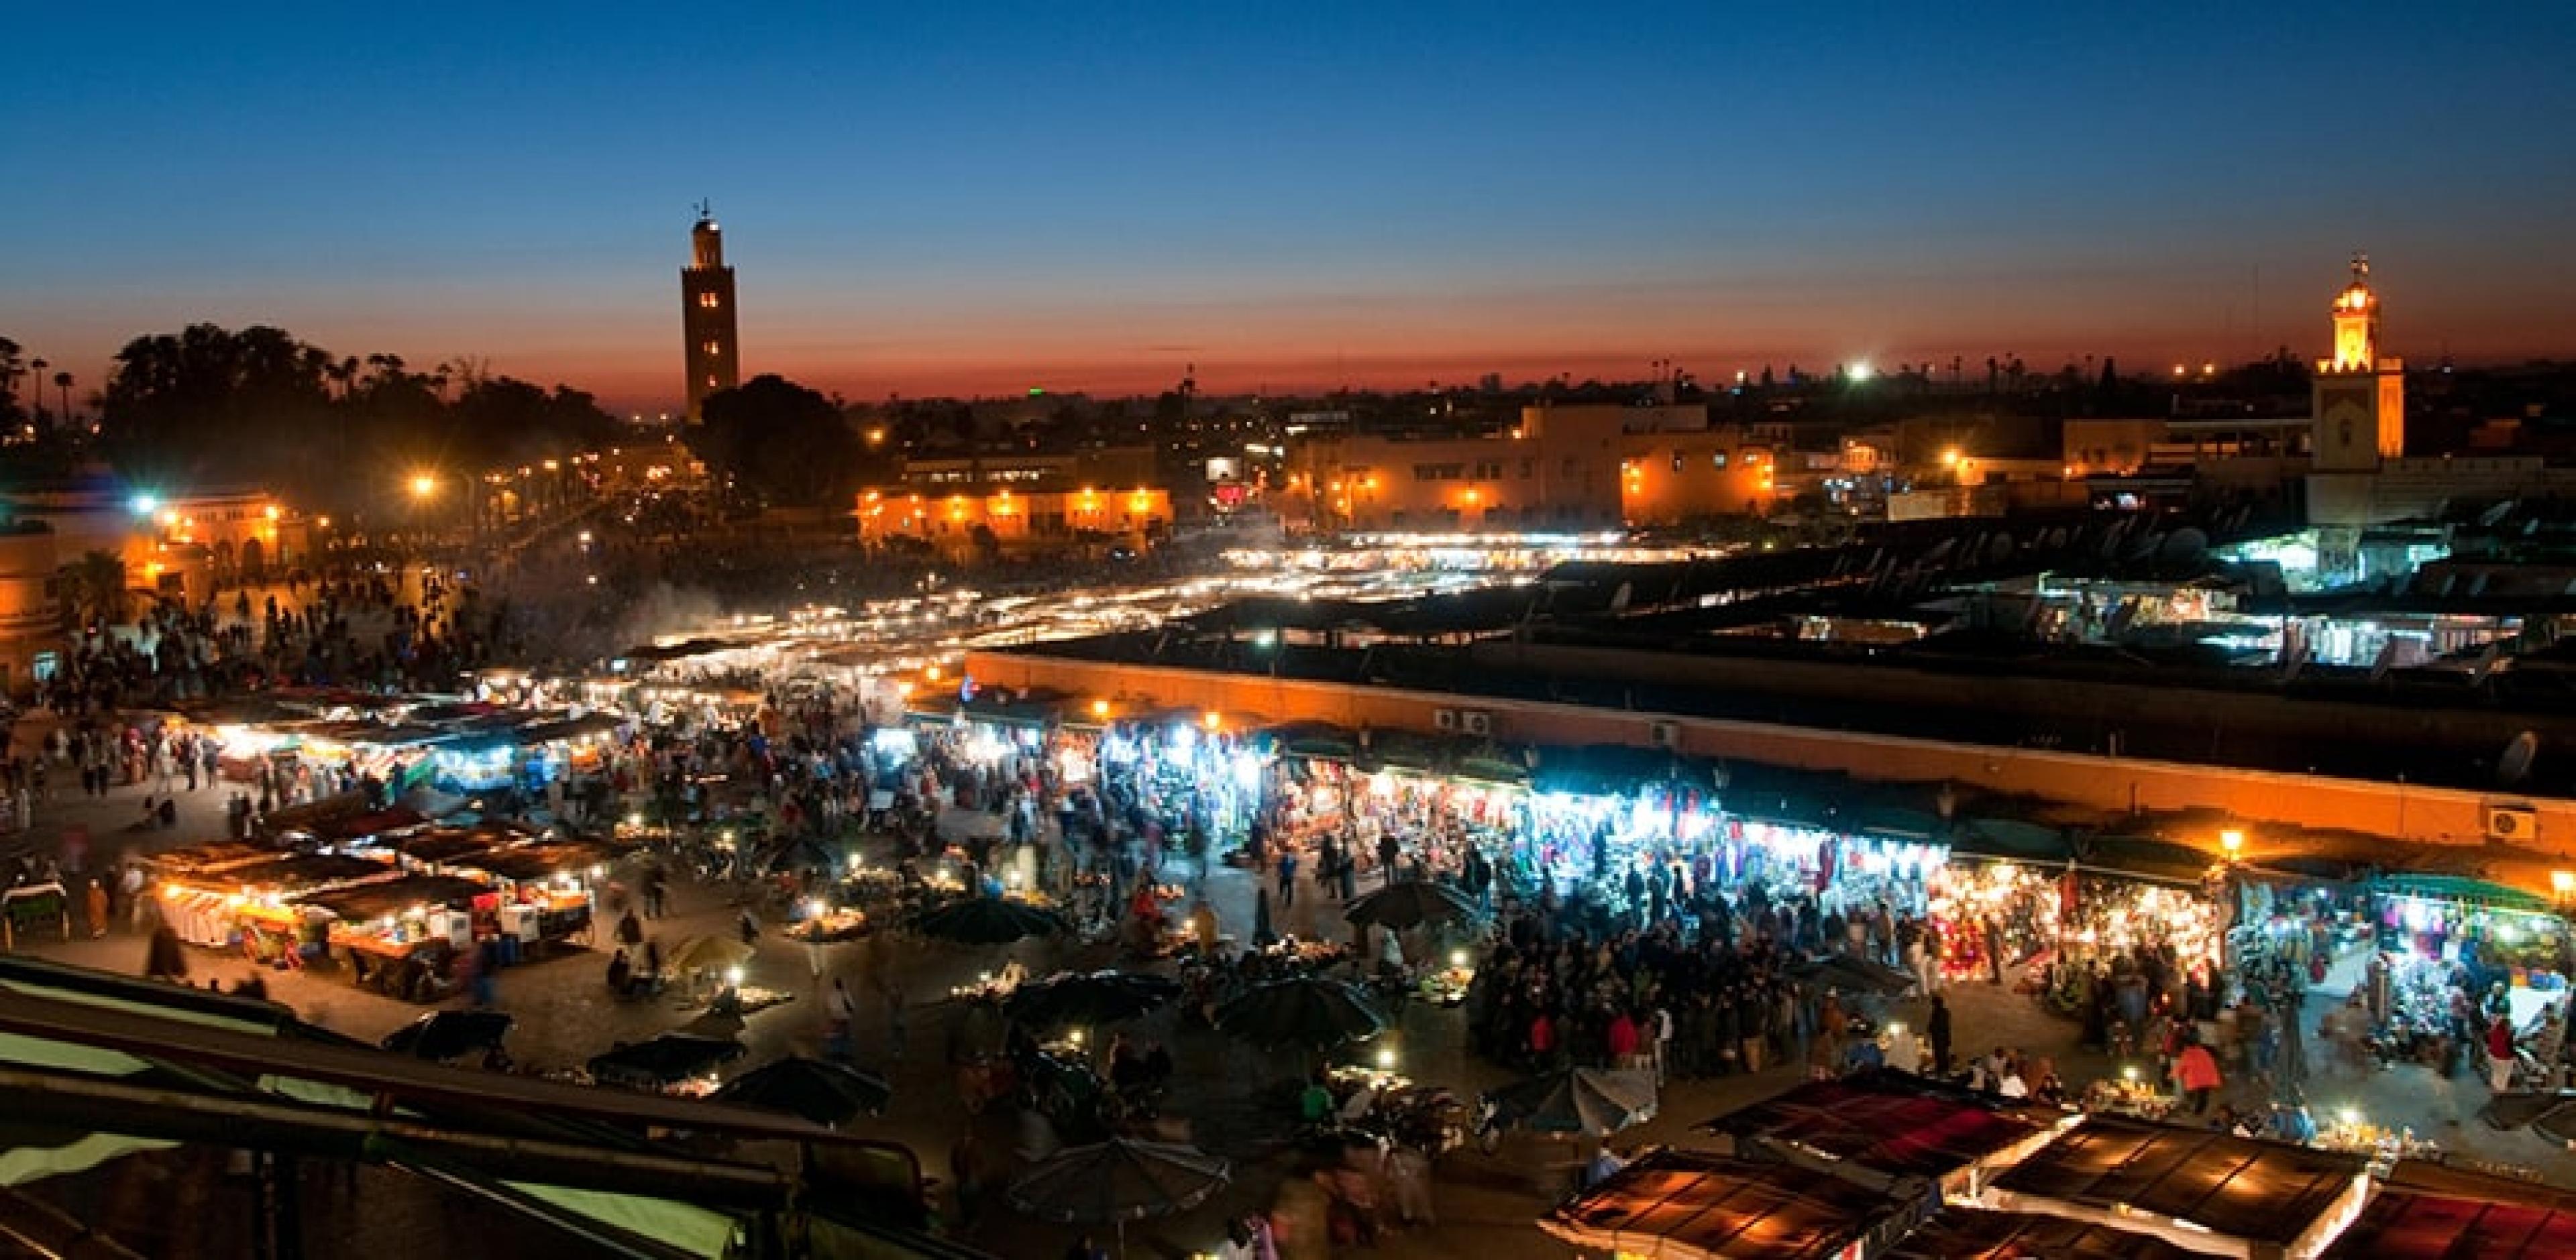 Djemaa El Fnaa Square in Marrakech at night